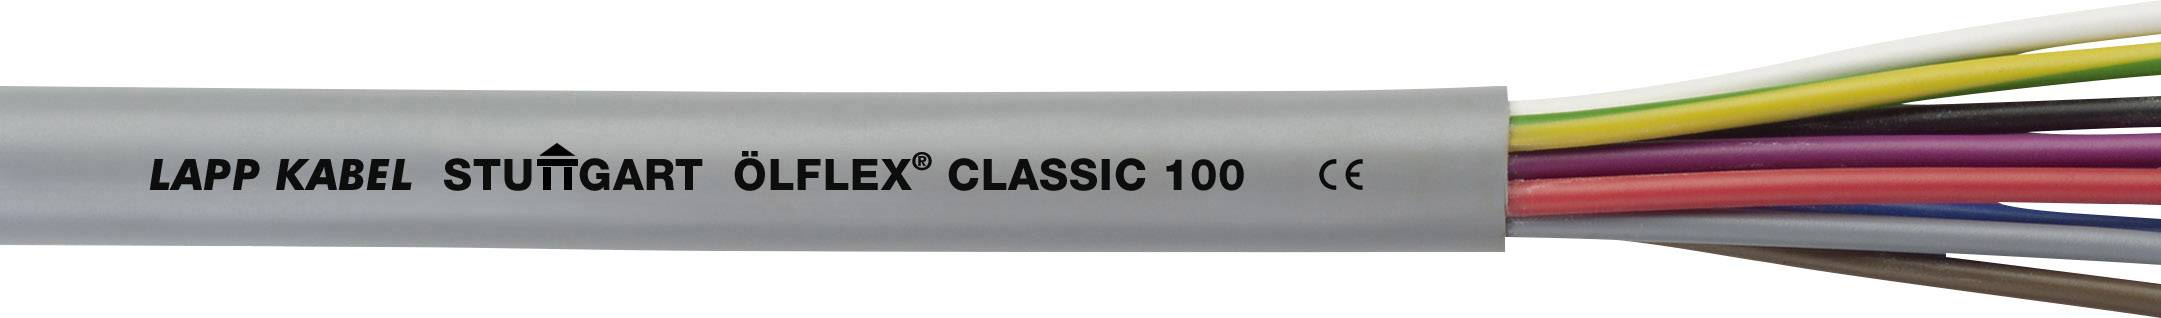 LAPP KABEL Steuerleitung ÖLFLEX® CLASSIC 100 3 G 2.5 mm² Grau LappKabel 1120801/1000 1000 m